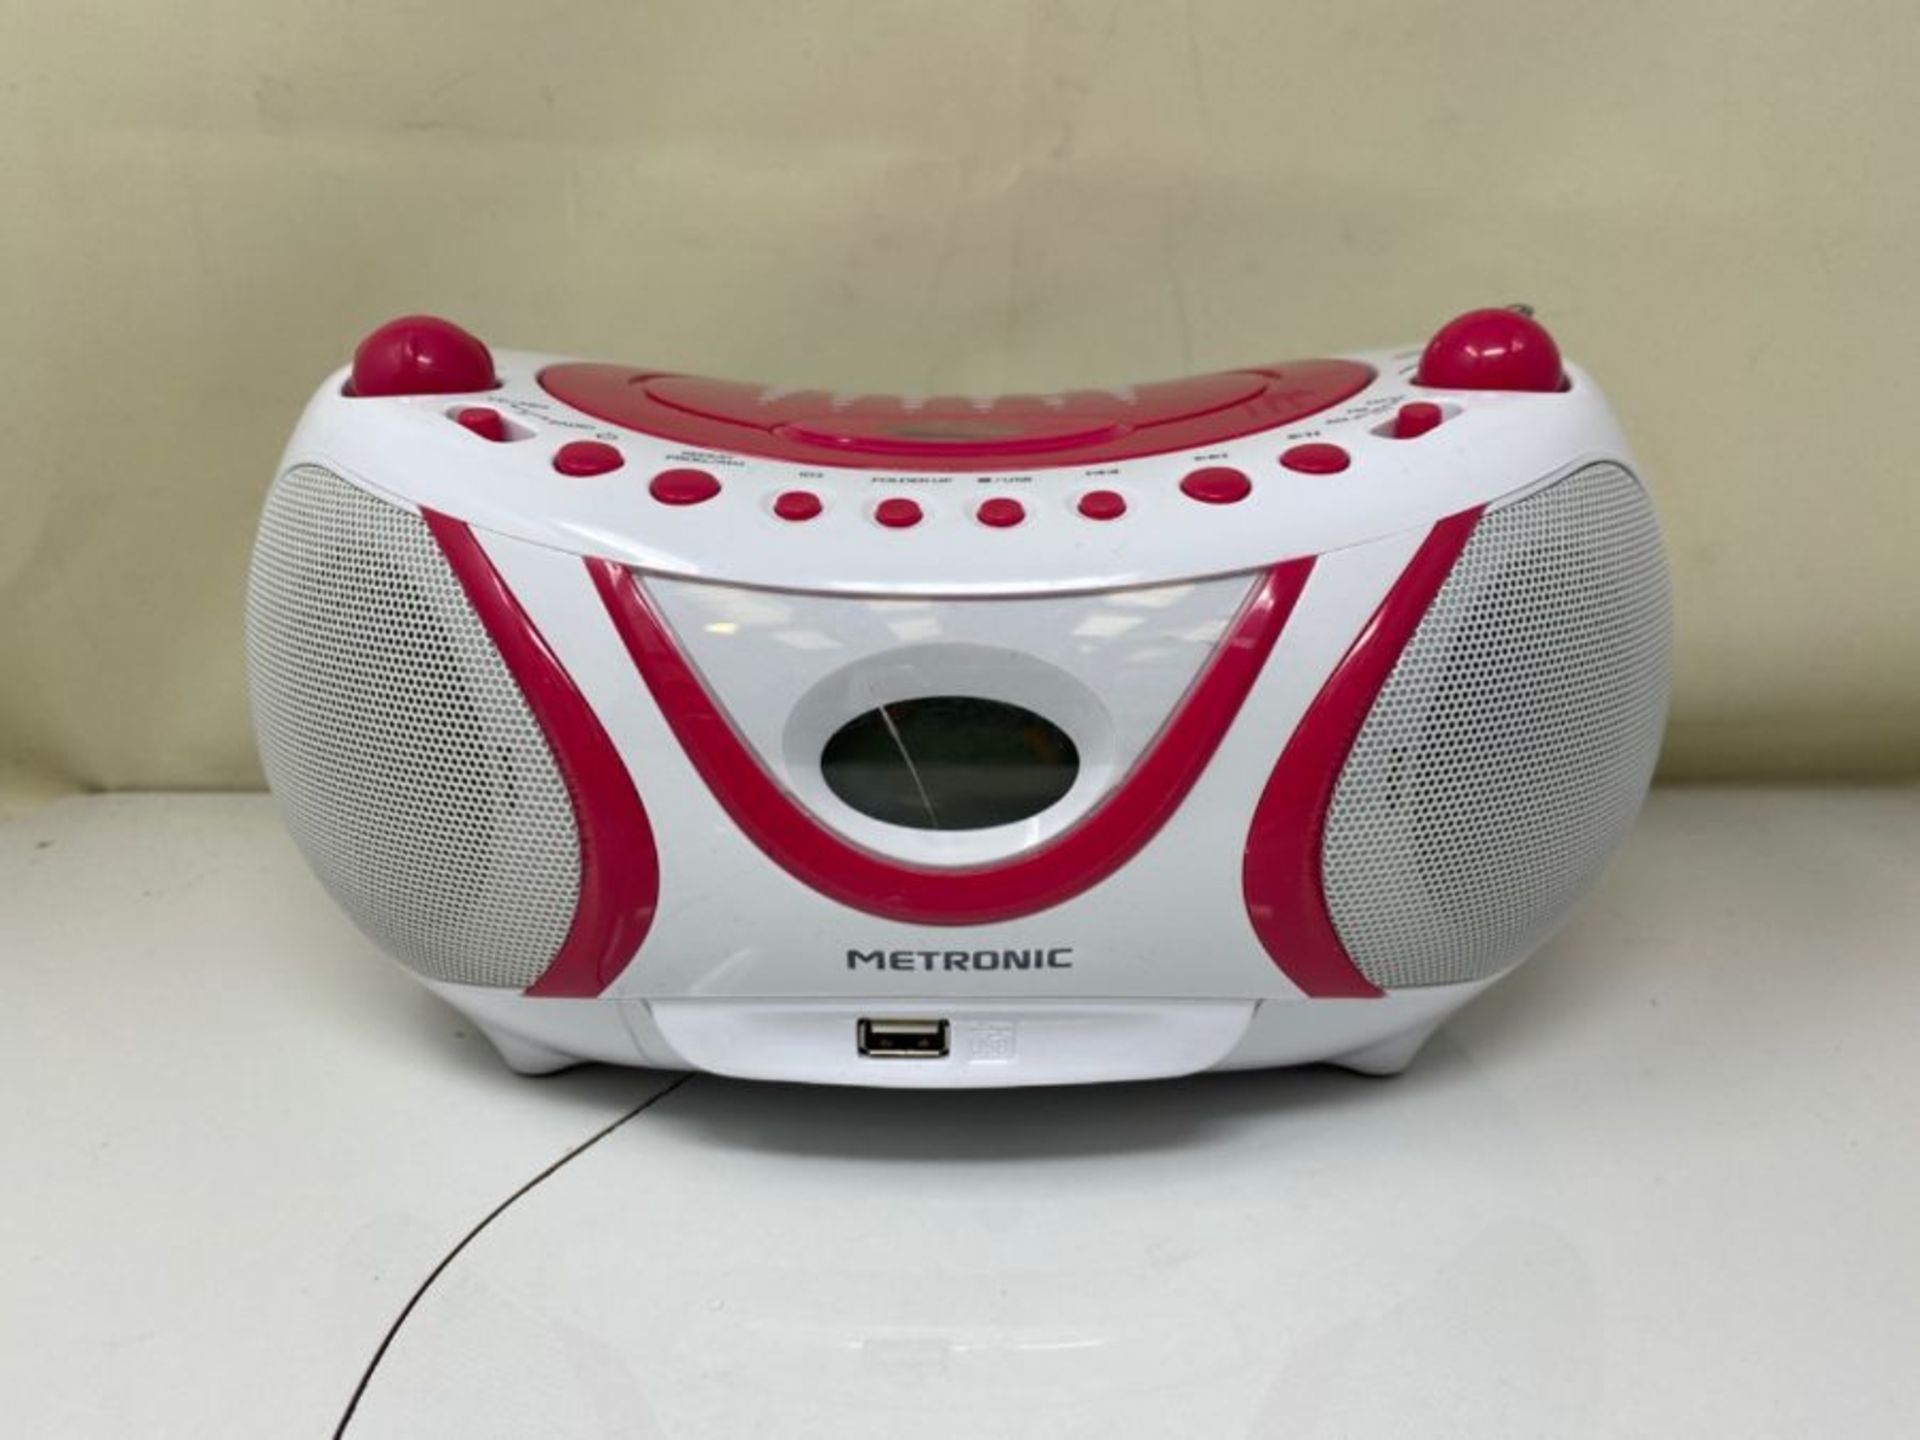 Metronic 477109 Radio / Lecteur CD / MP3 Portable Pop Pink avec Port USB - Rose et Bla - Image 3 of 3